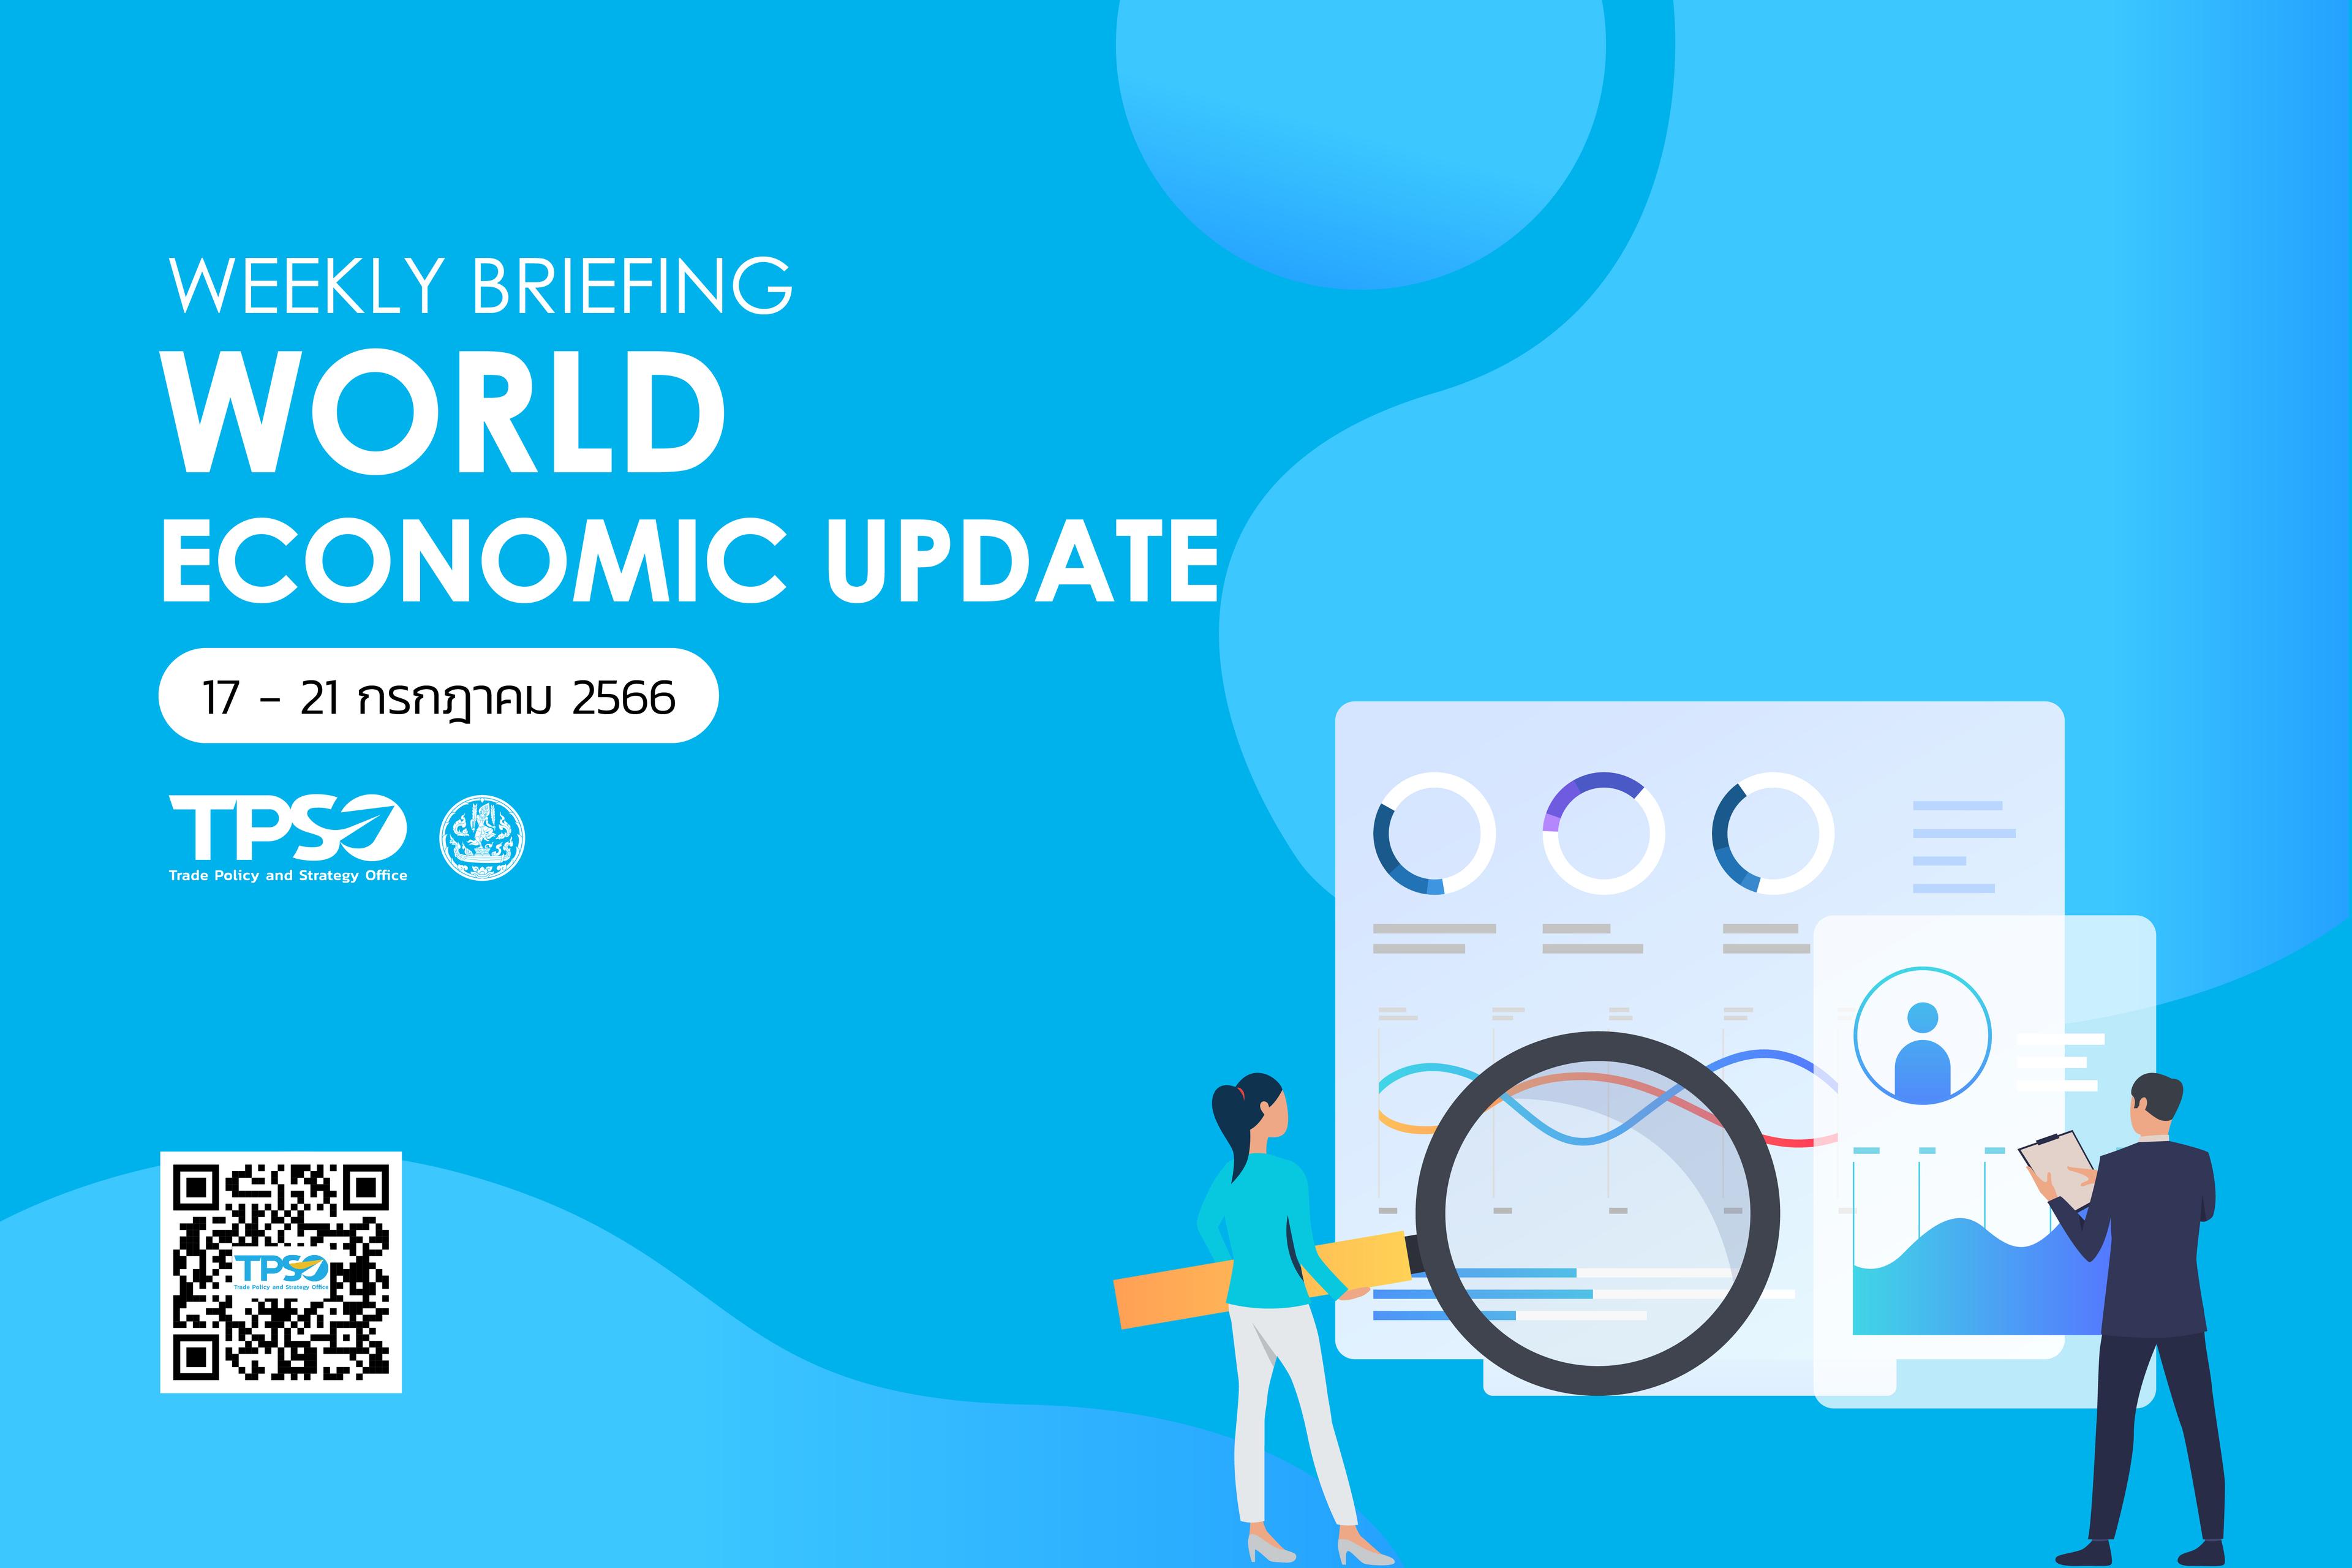 Weekly Briefing World Economic Update 17 - 21 กรกฎาคม 2566 